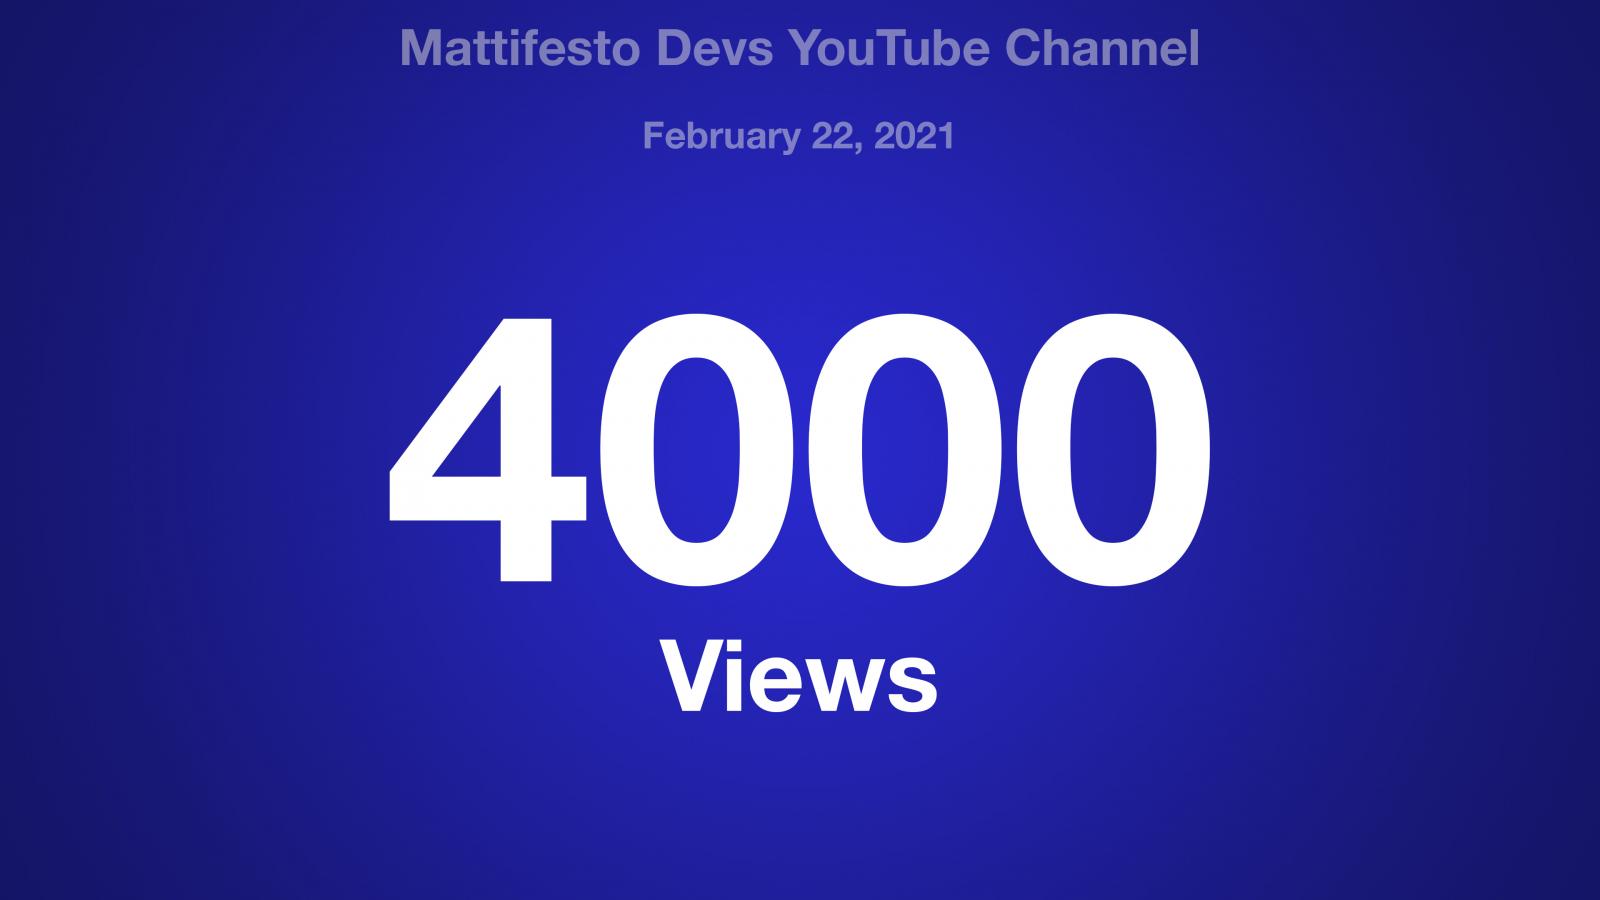 Mattifesto Devs YouTube Channel, February 22, 2021, 4000 Views